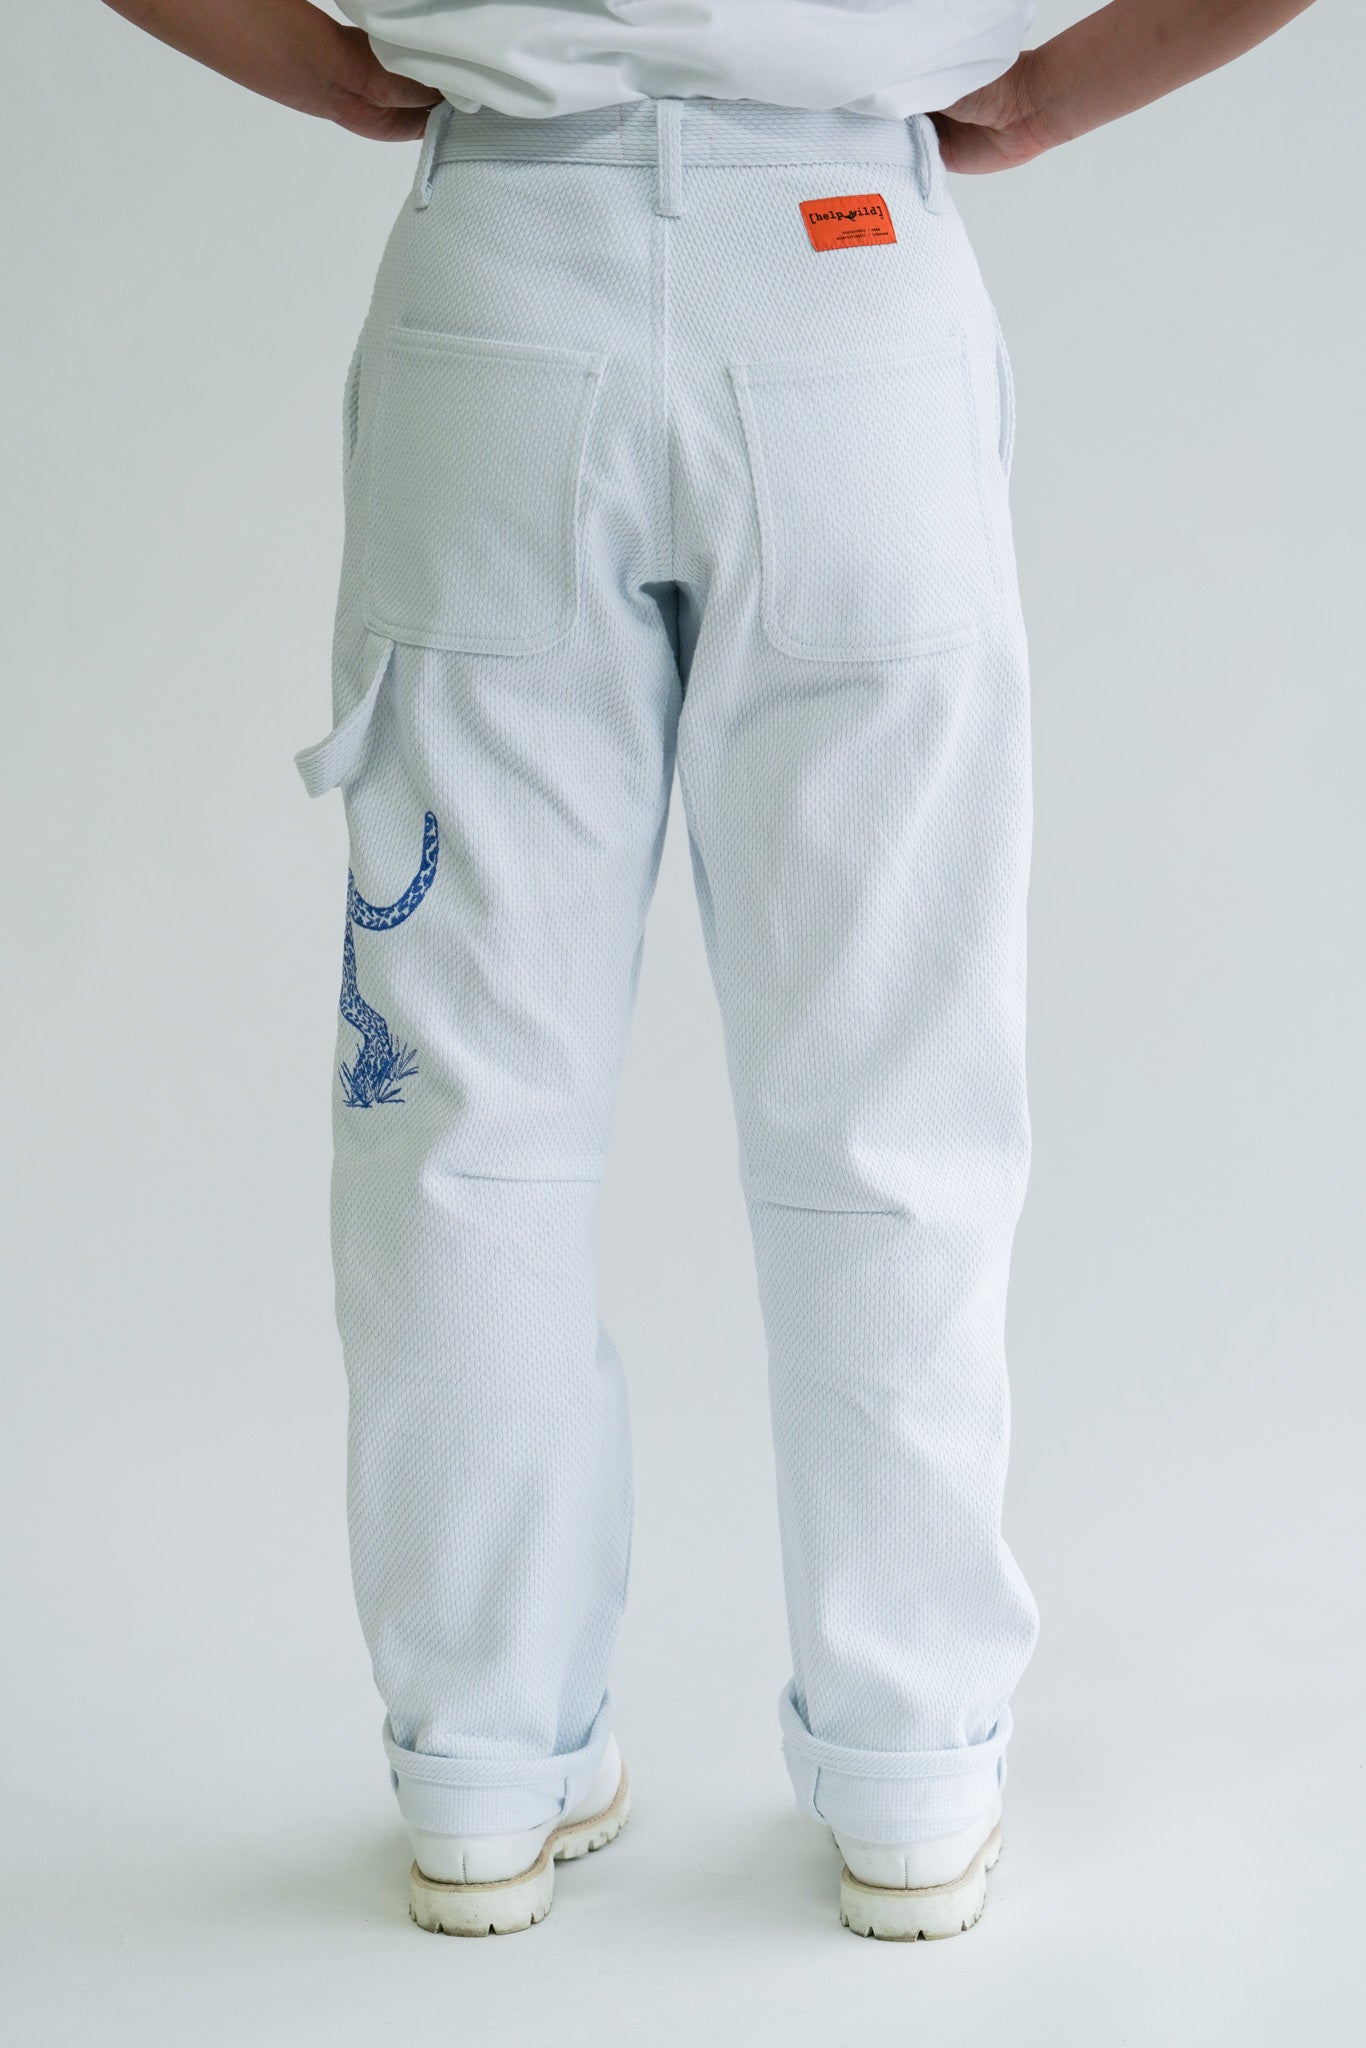 Judo Gi Work Pants - White